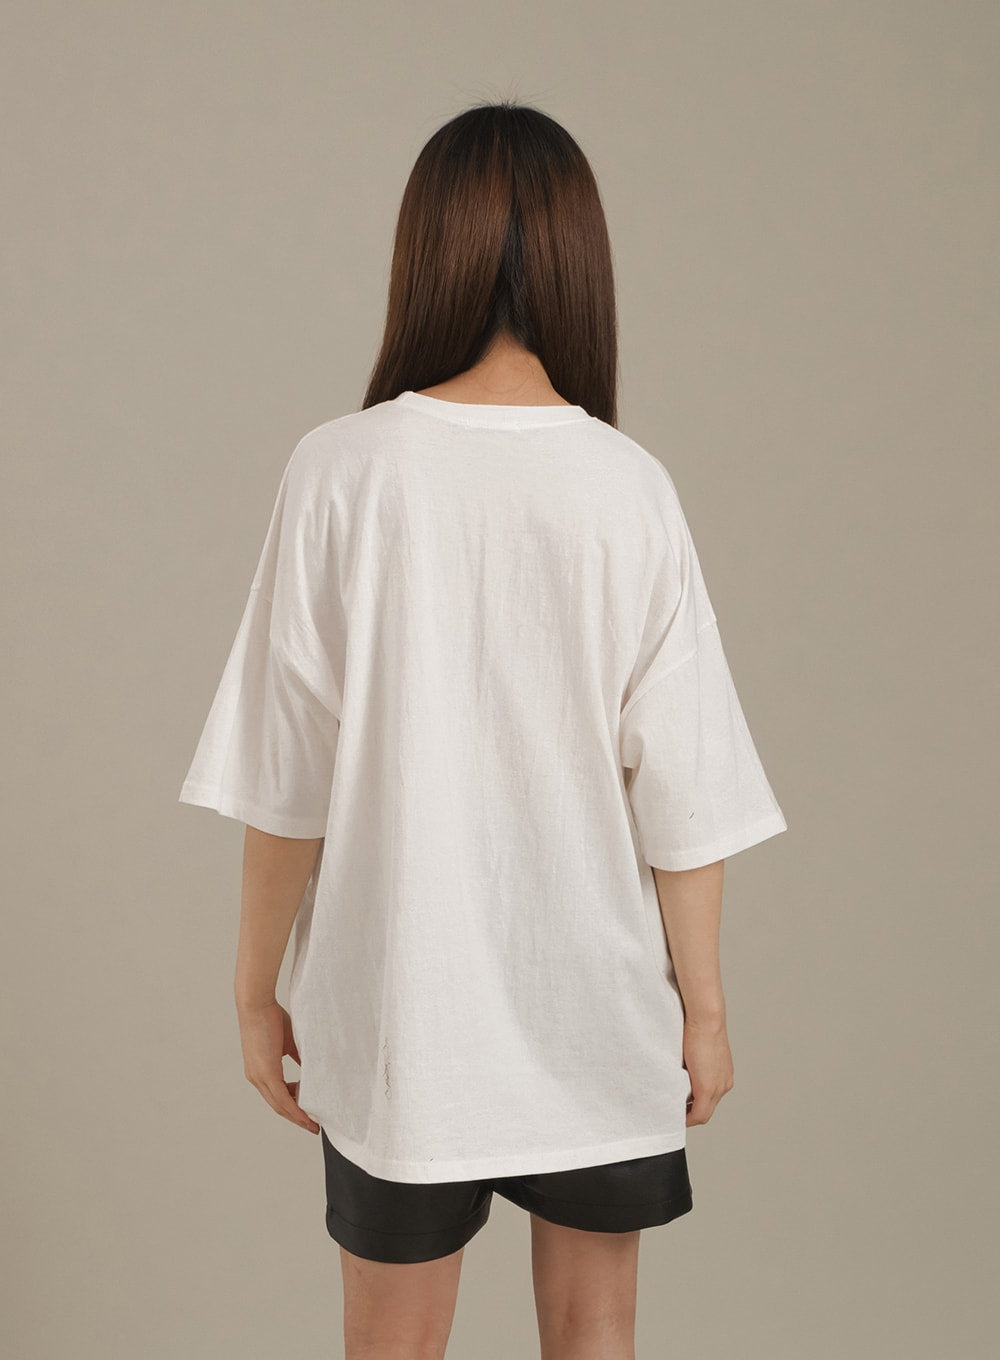 Fleece Lined Short Sleeve T Shirt with Print